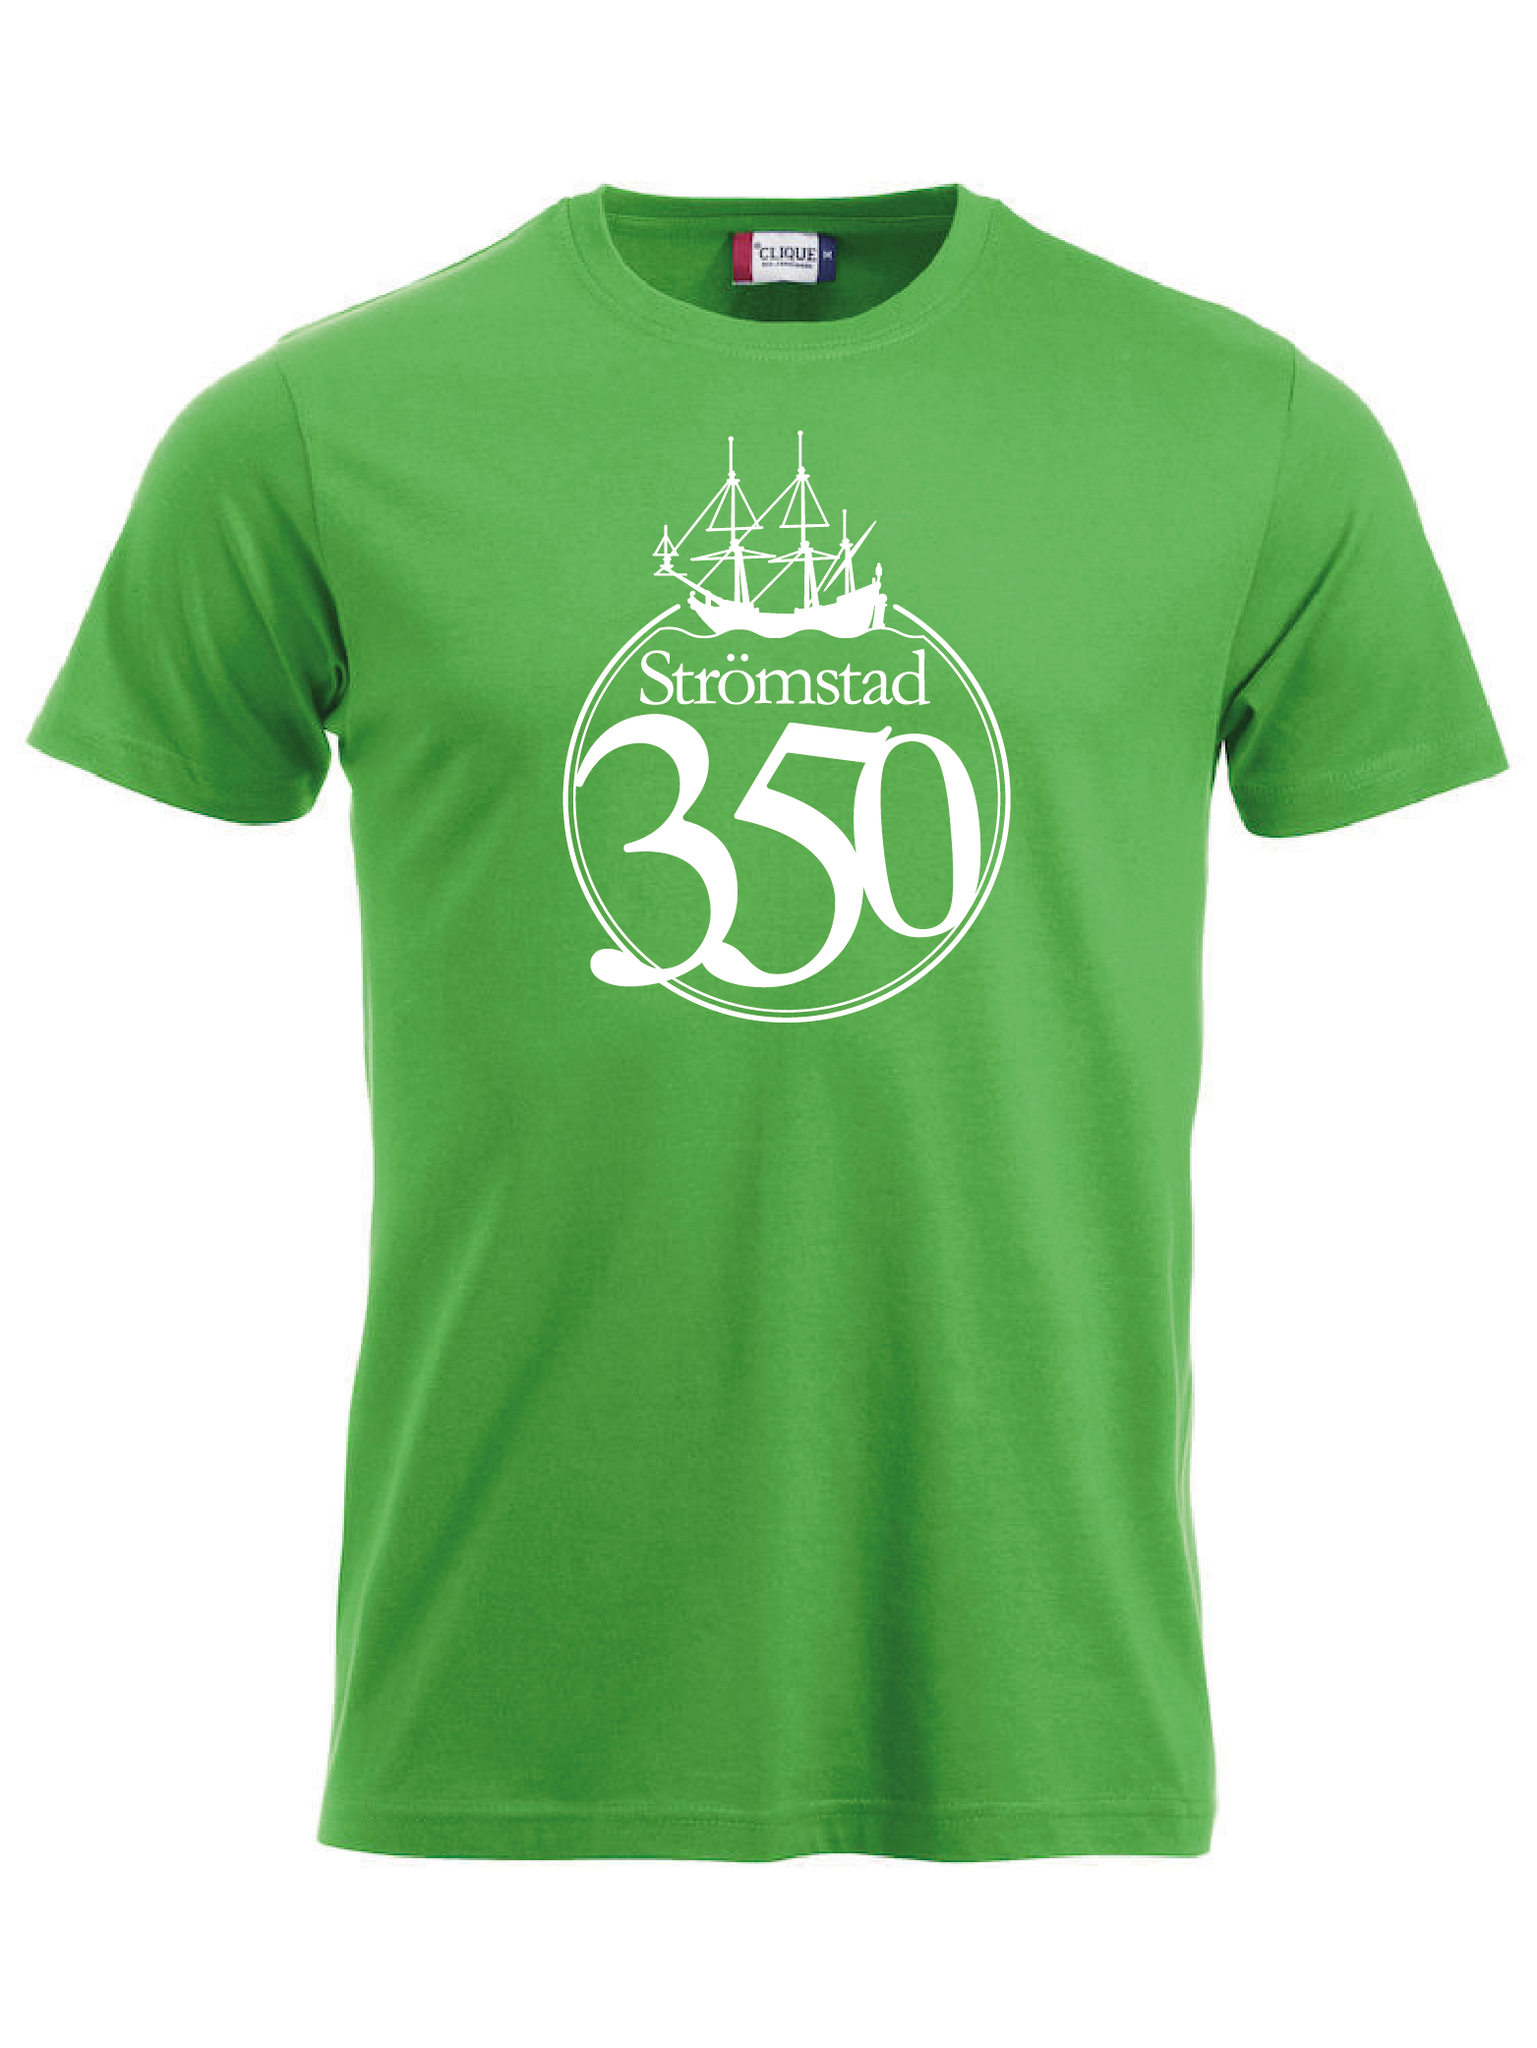 Grön T-shirt "STRÖMSTAD 350 år"